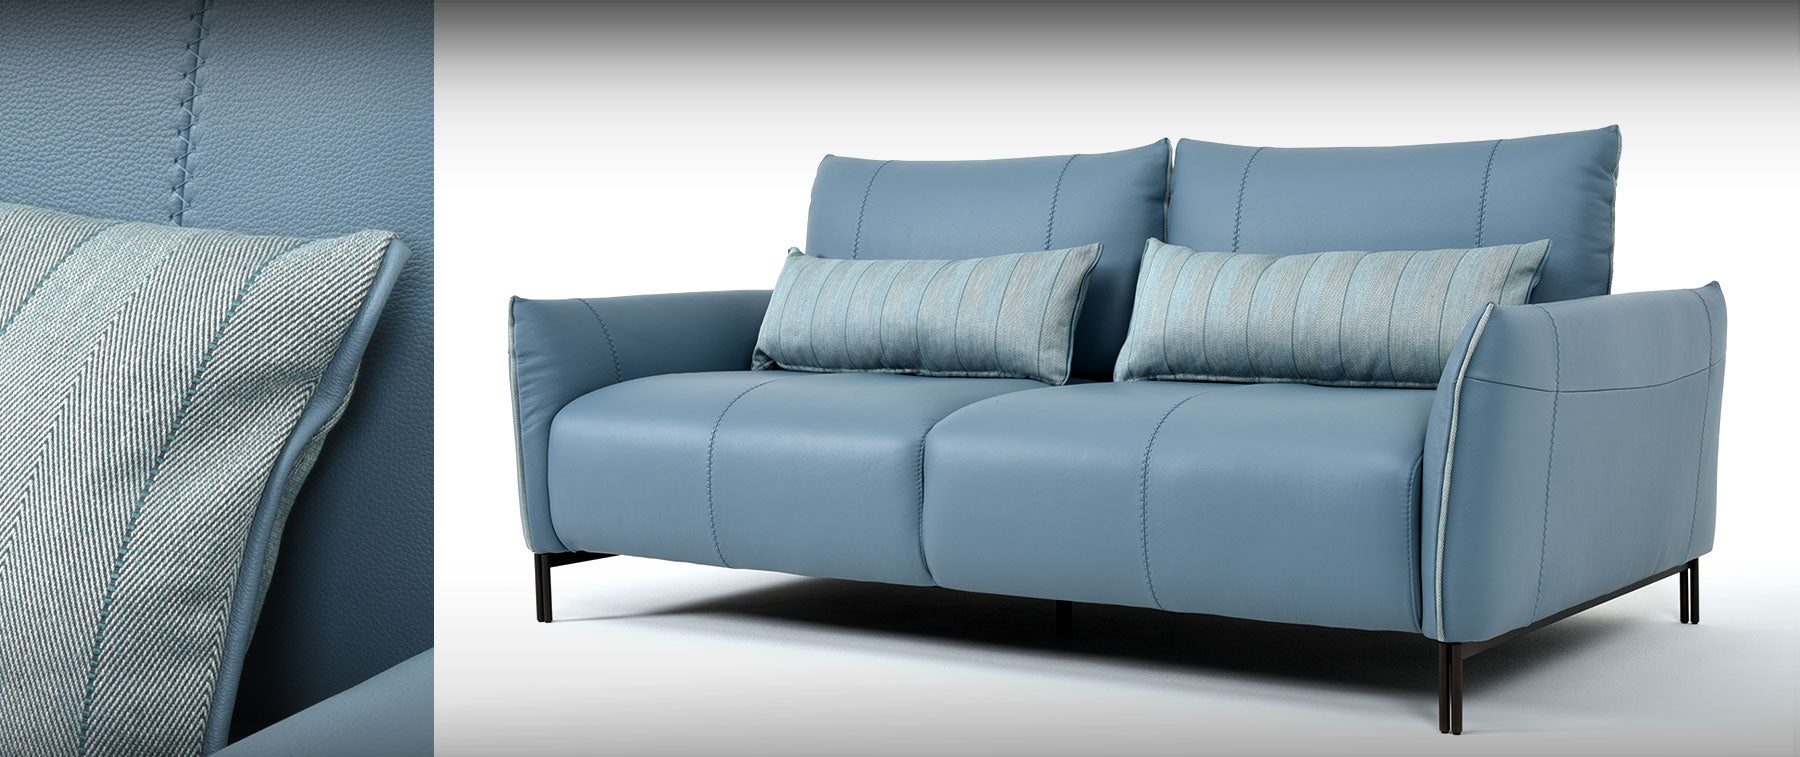 Scan Design Modern Contemporary Furniture Store